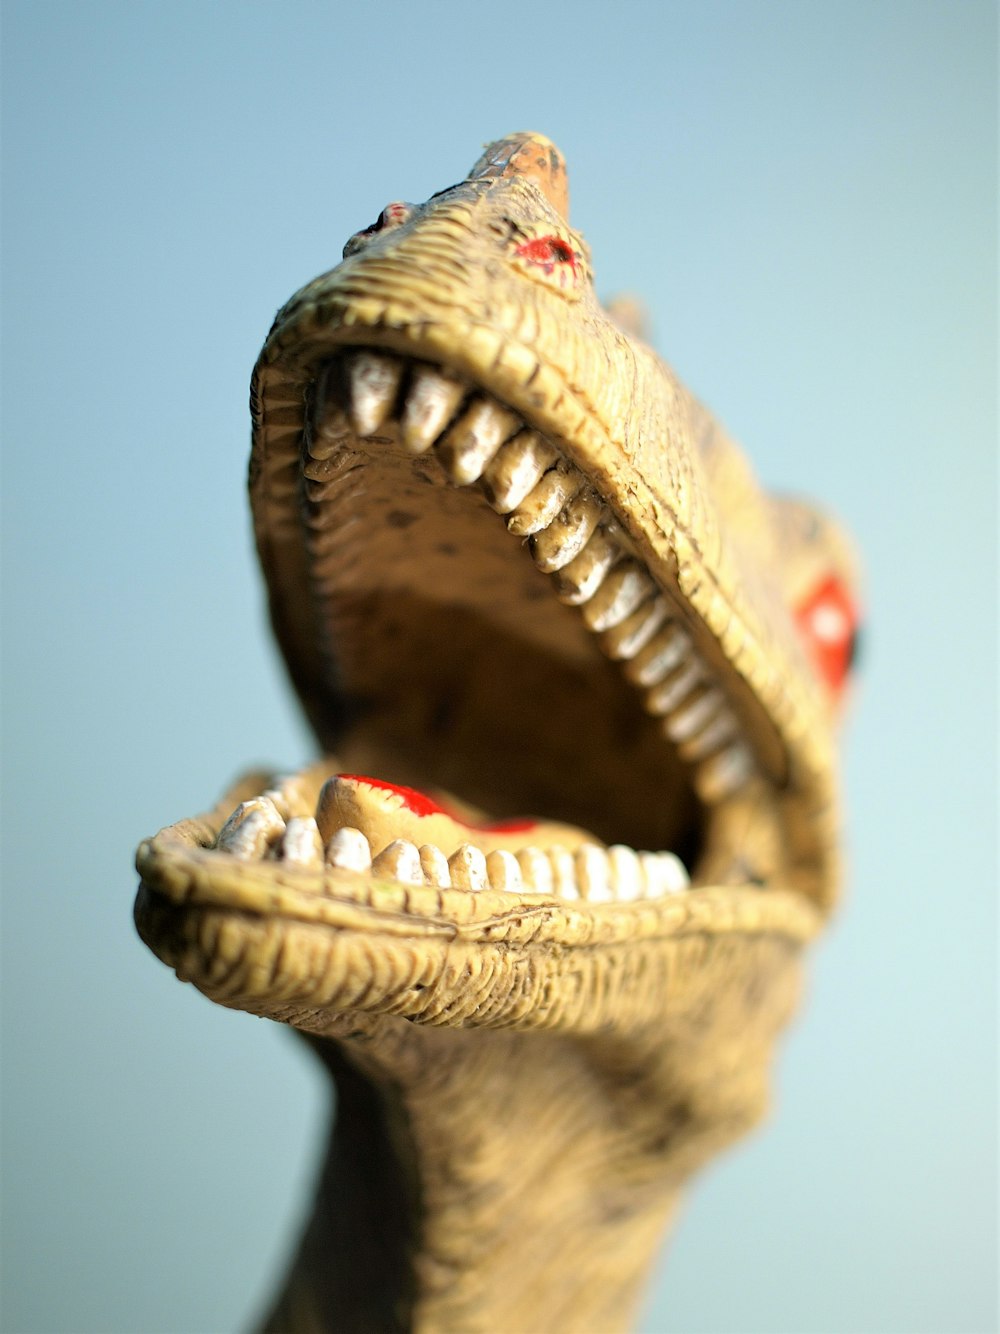 Fotografia de foco raso do velociraptor